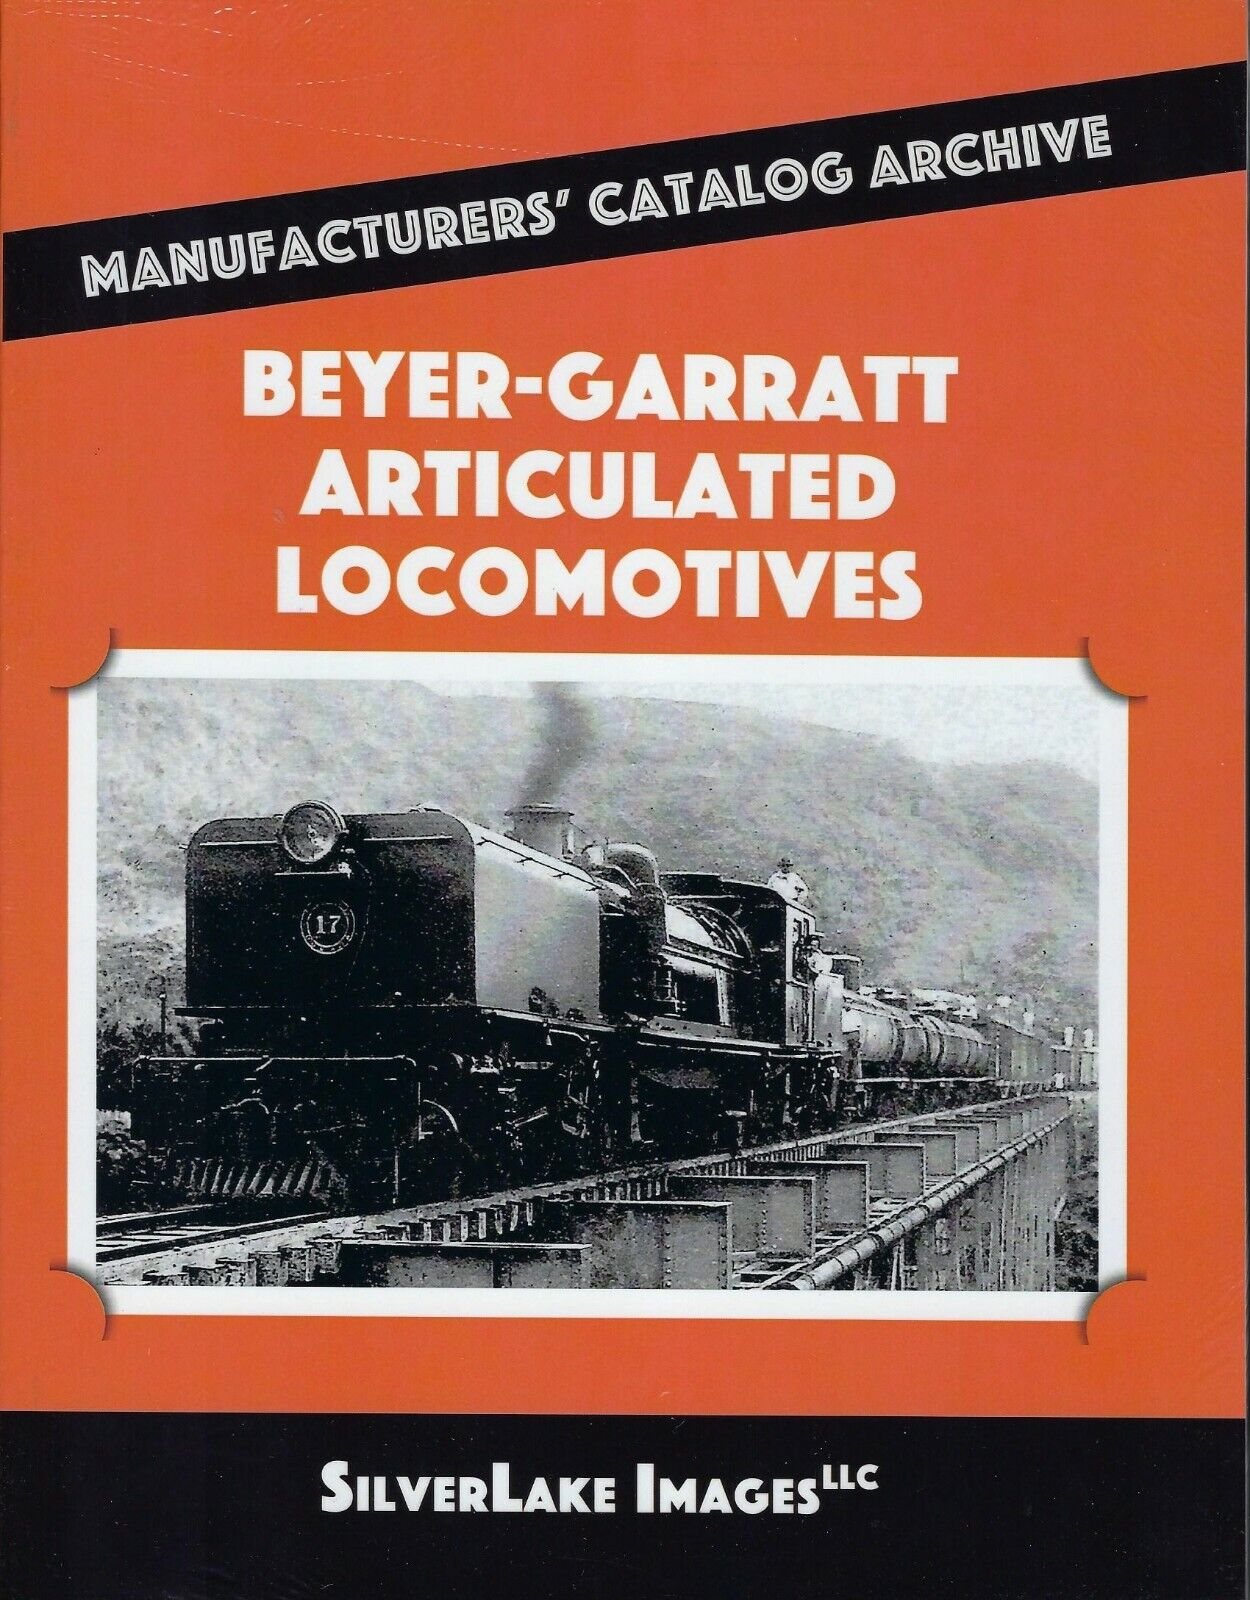 BEYER-GARRATT Articulated Locomotives from Manufacturers' Catalog Archive (NEW)